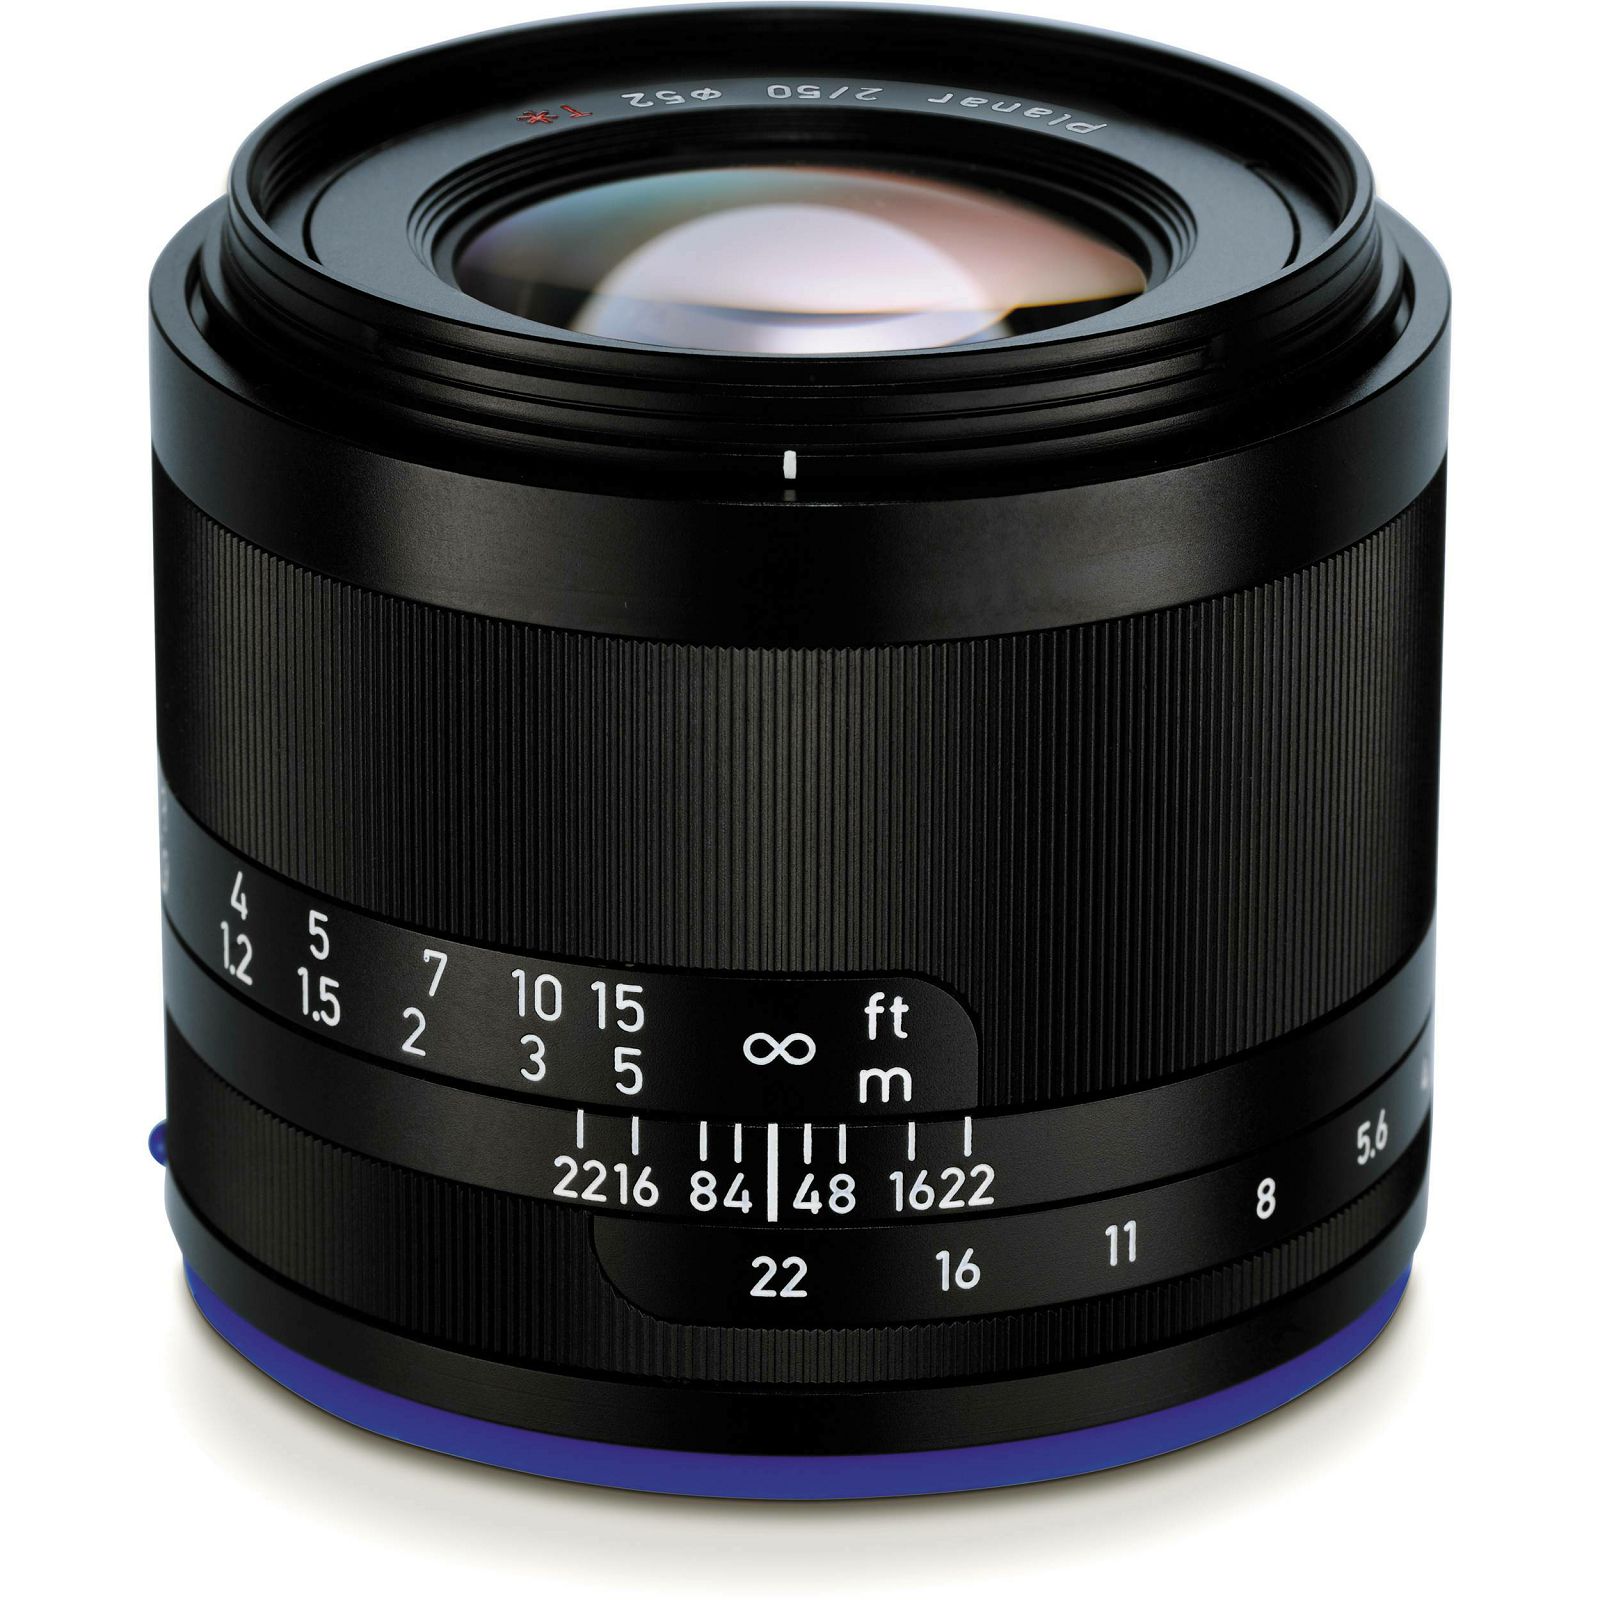 Zeiss Loxia 50mm f/2 FE objektiv za Sony E-mount (2103-748)